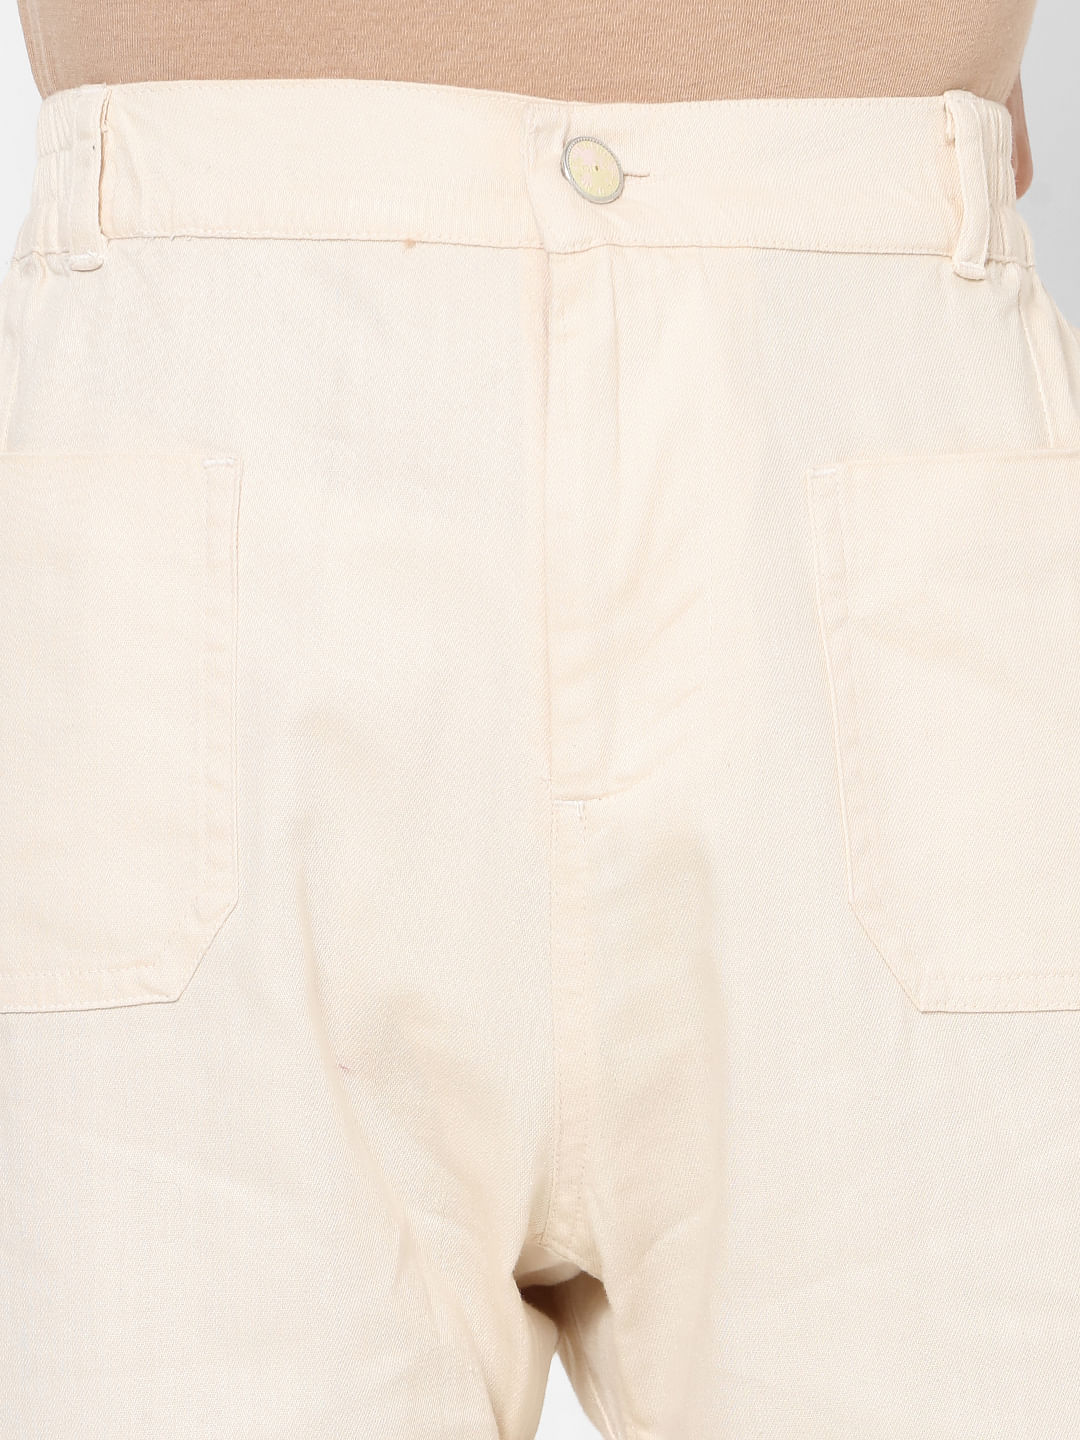 CottonLinen Flat Trousers MenS Off White Casual Plain Trouser